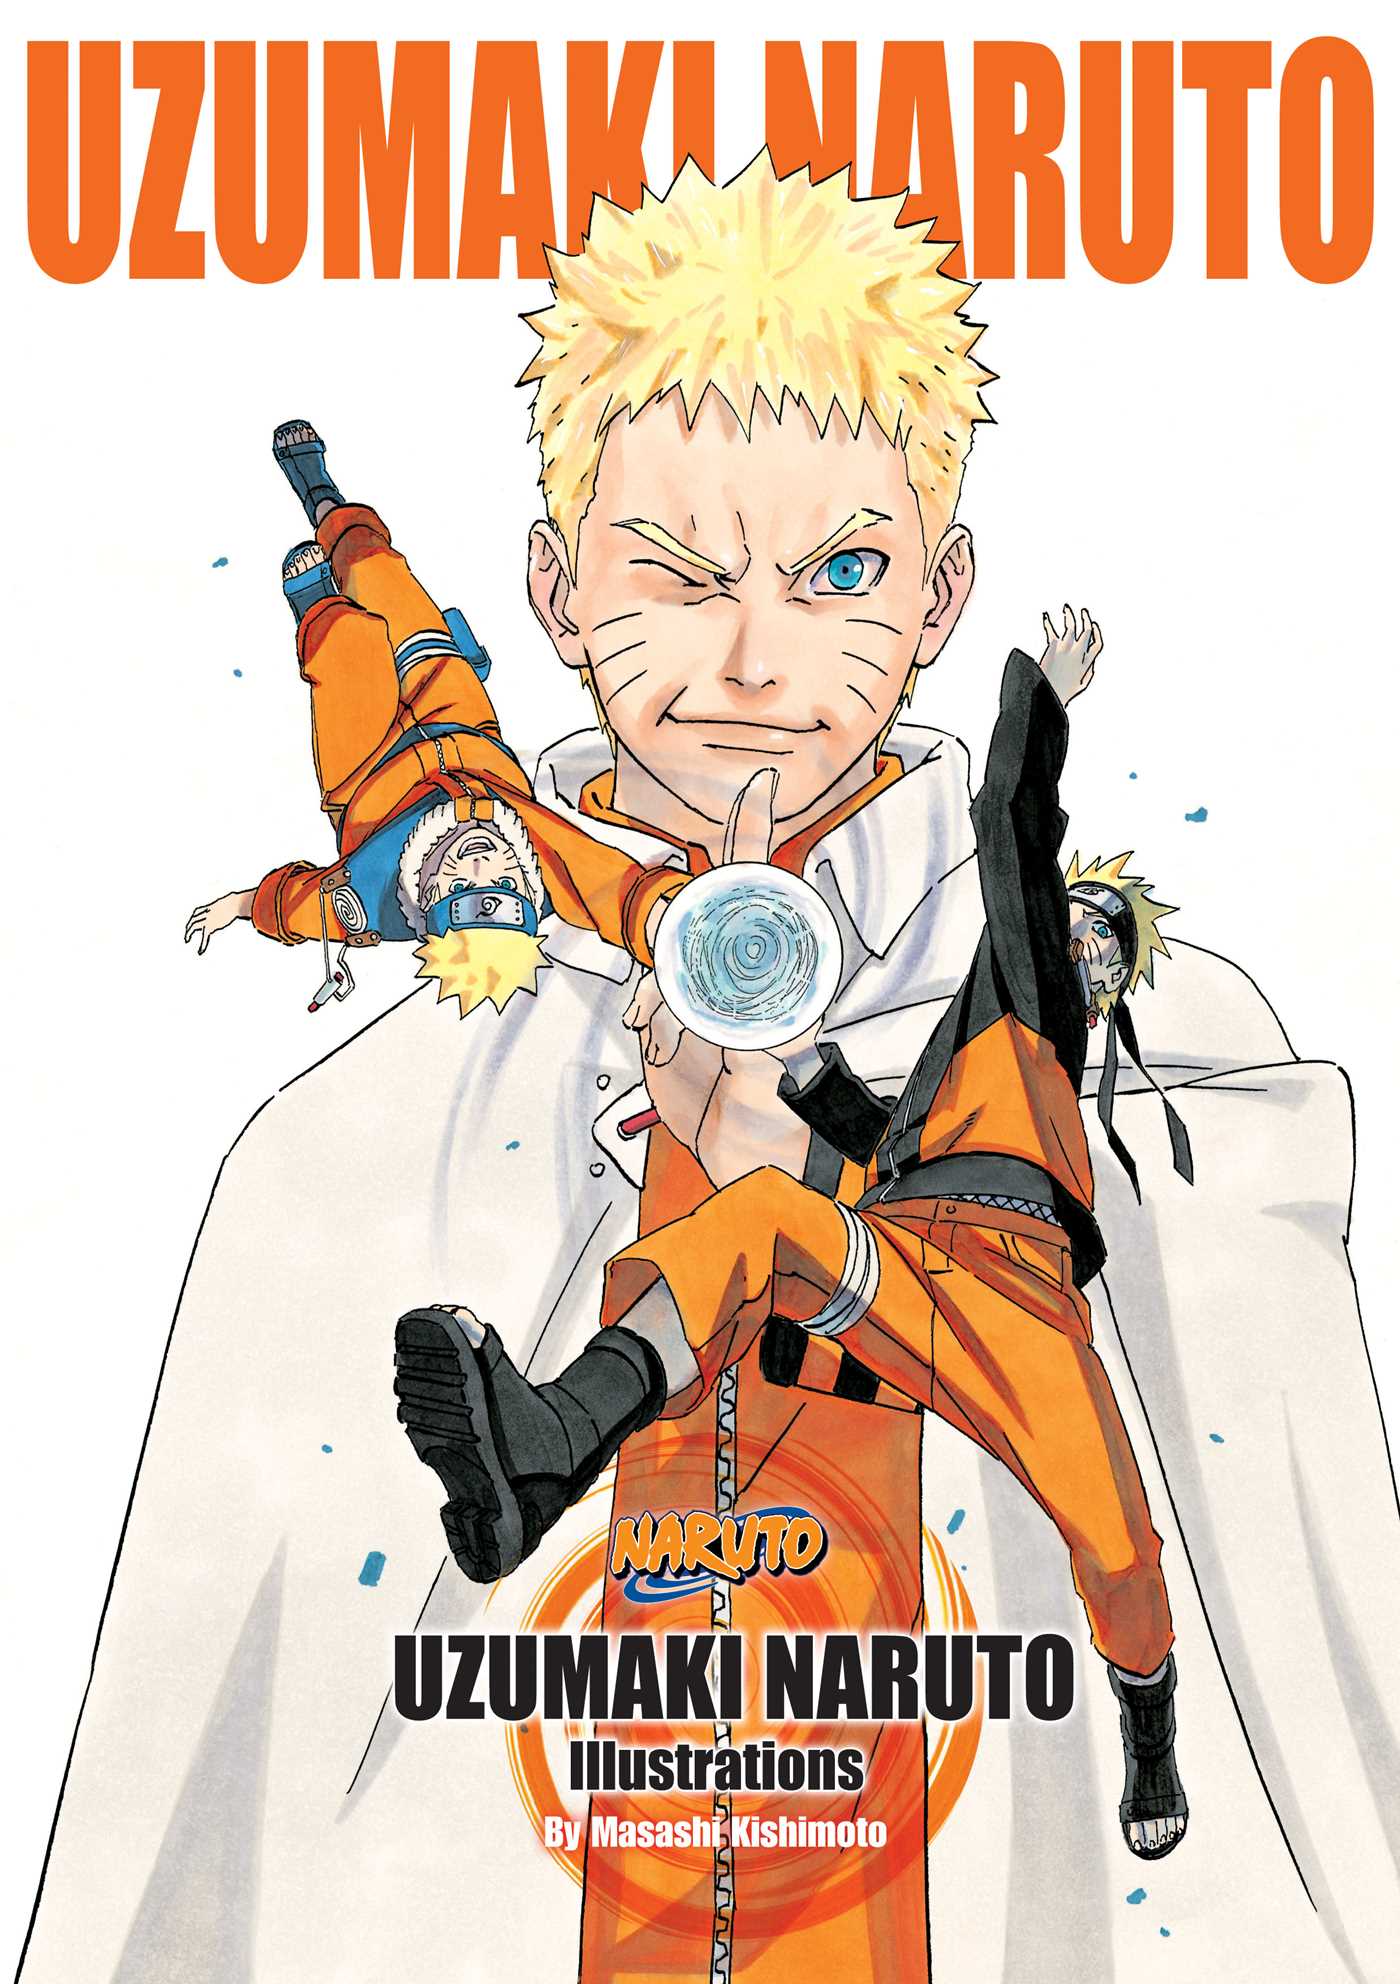 Uzumaki Naruto: Illustrations. Book by Masashi Kishimoto. Official Publisher Page. Simon & Schuster